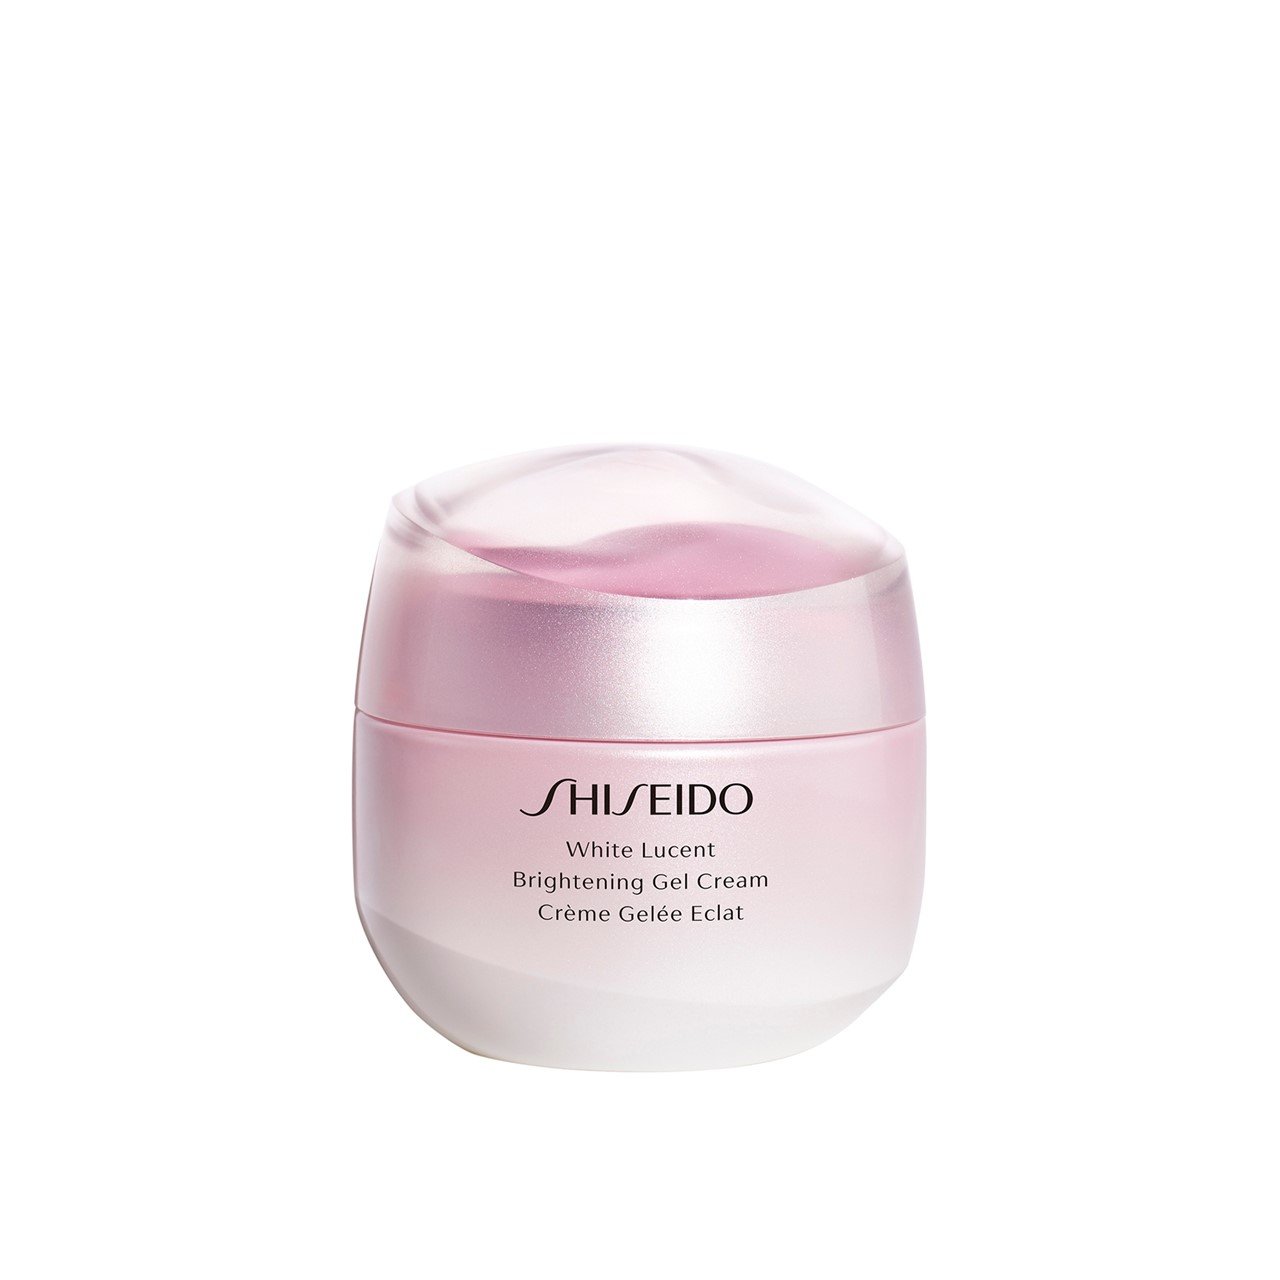 Shiseido White Lucent Brightening Gel Cream 50ml (1.69fl oz)